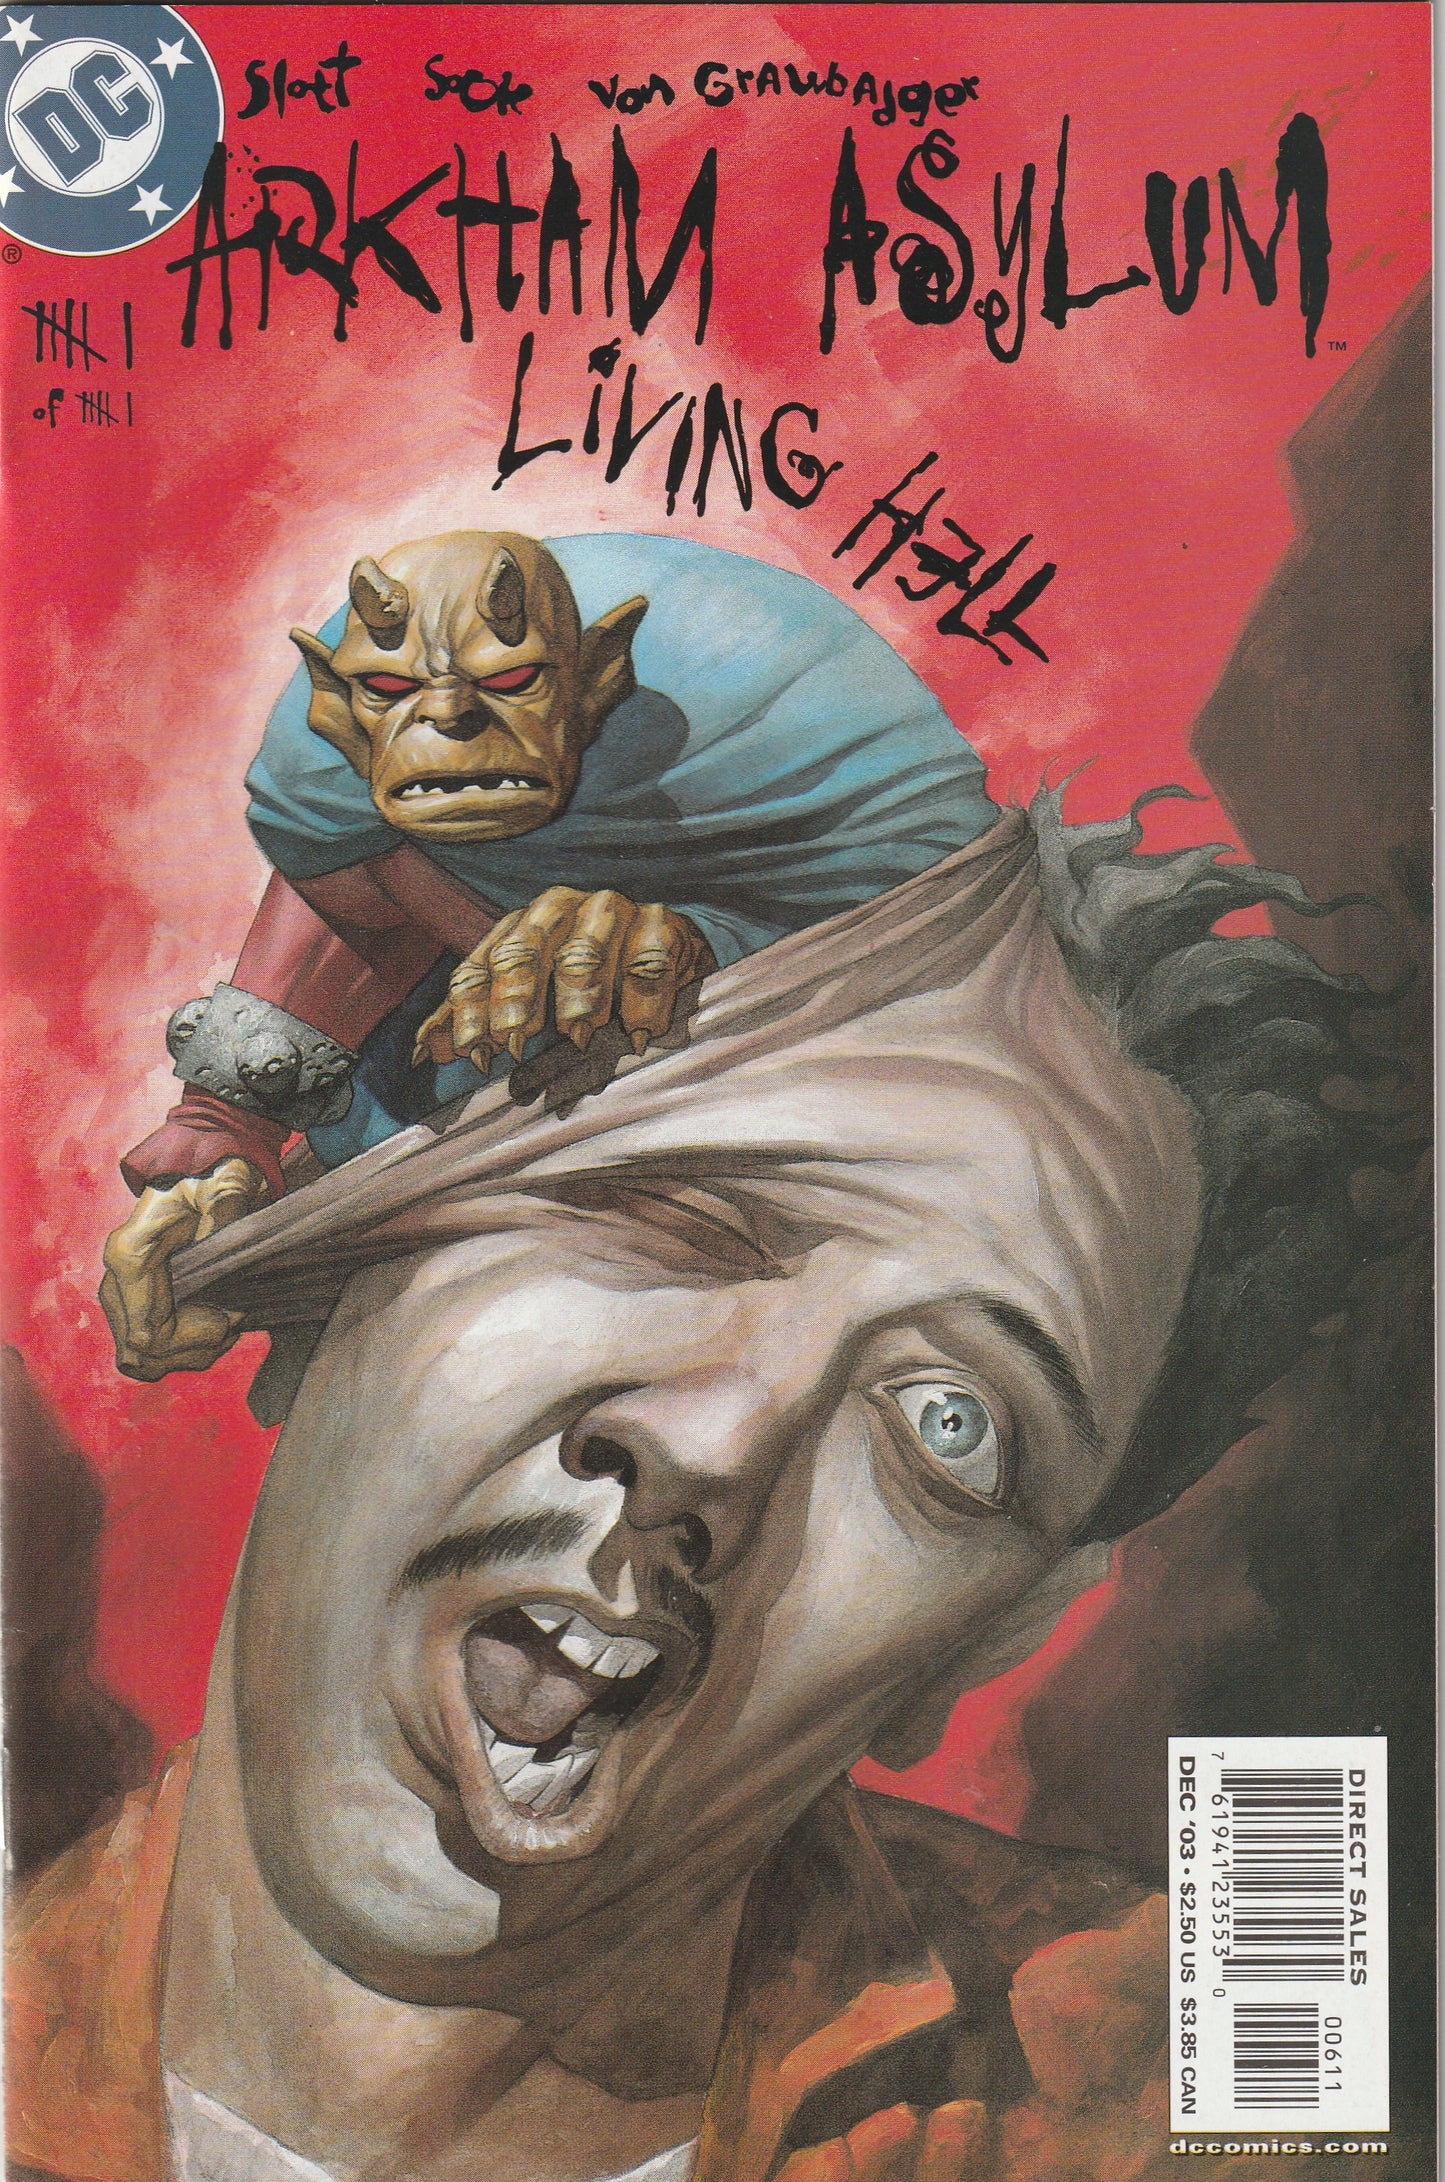 Arkham Asylum: Living Hell (2003) - Complete 6 issue mini-series